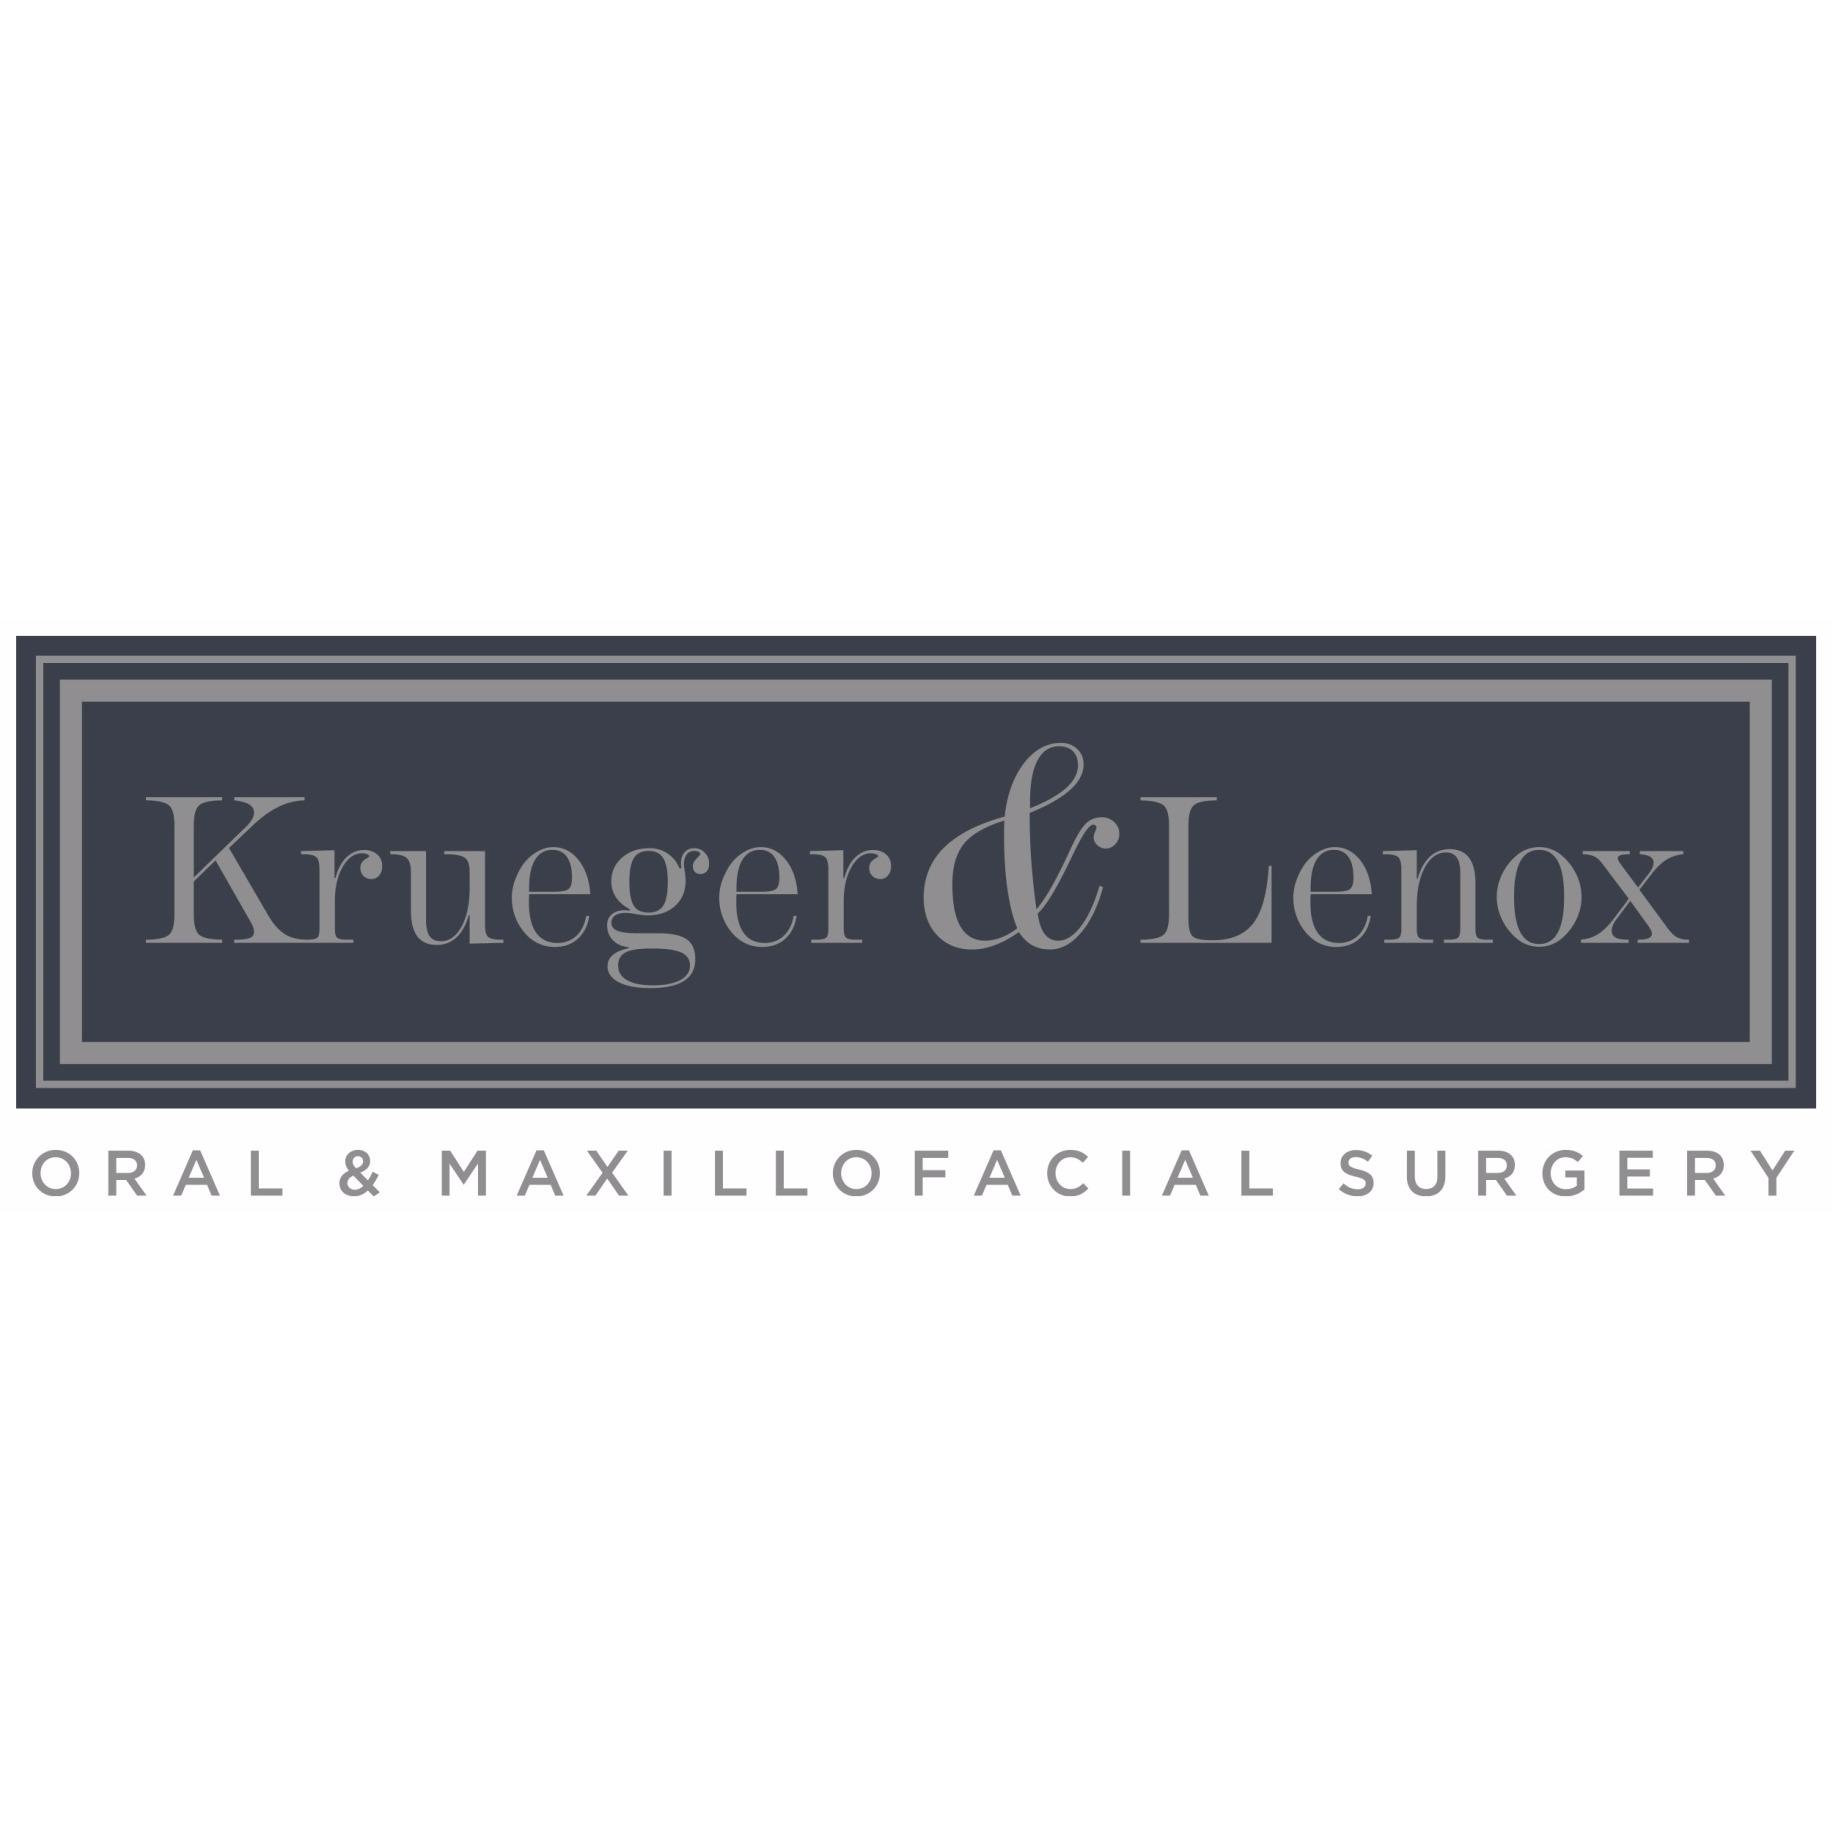 Krueger & Lenox: Oral & Maxillofacial Surgery Photo